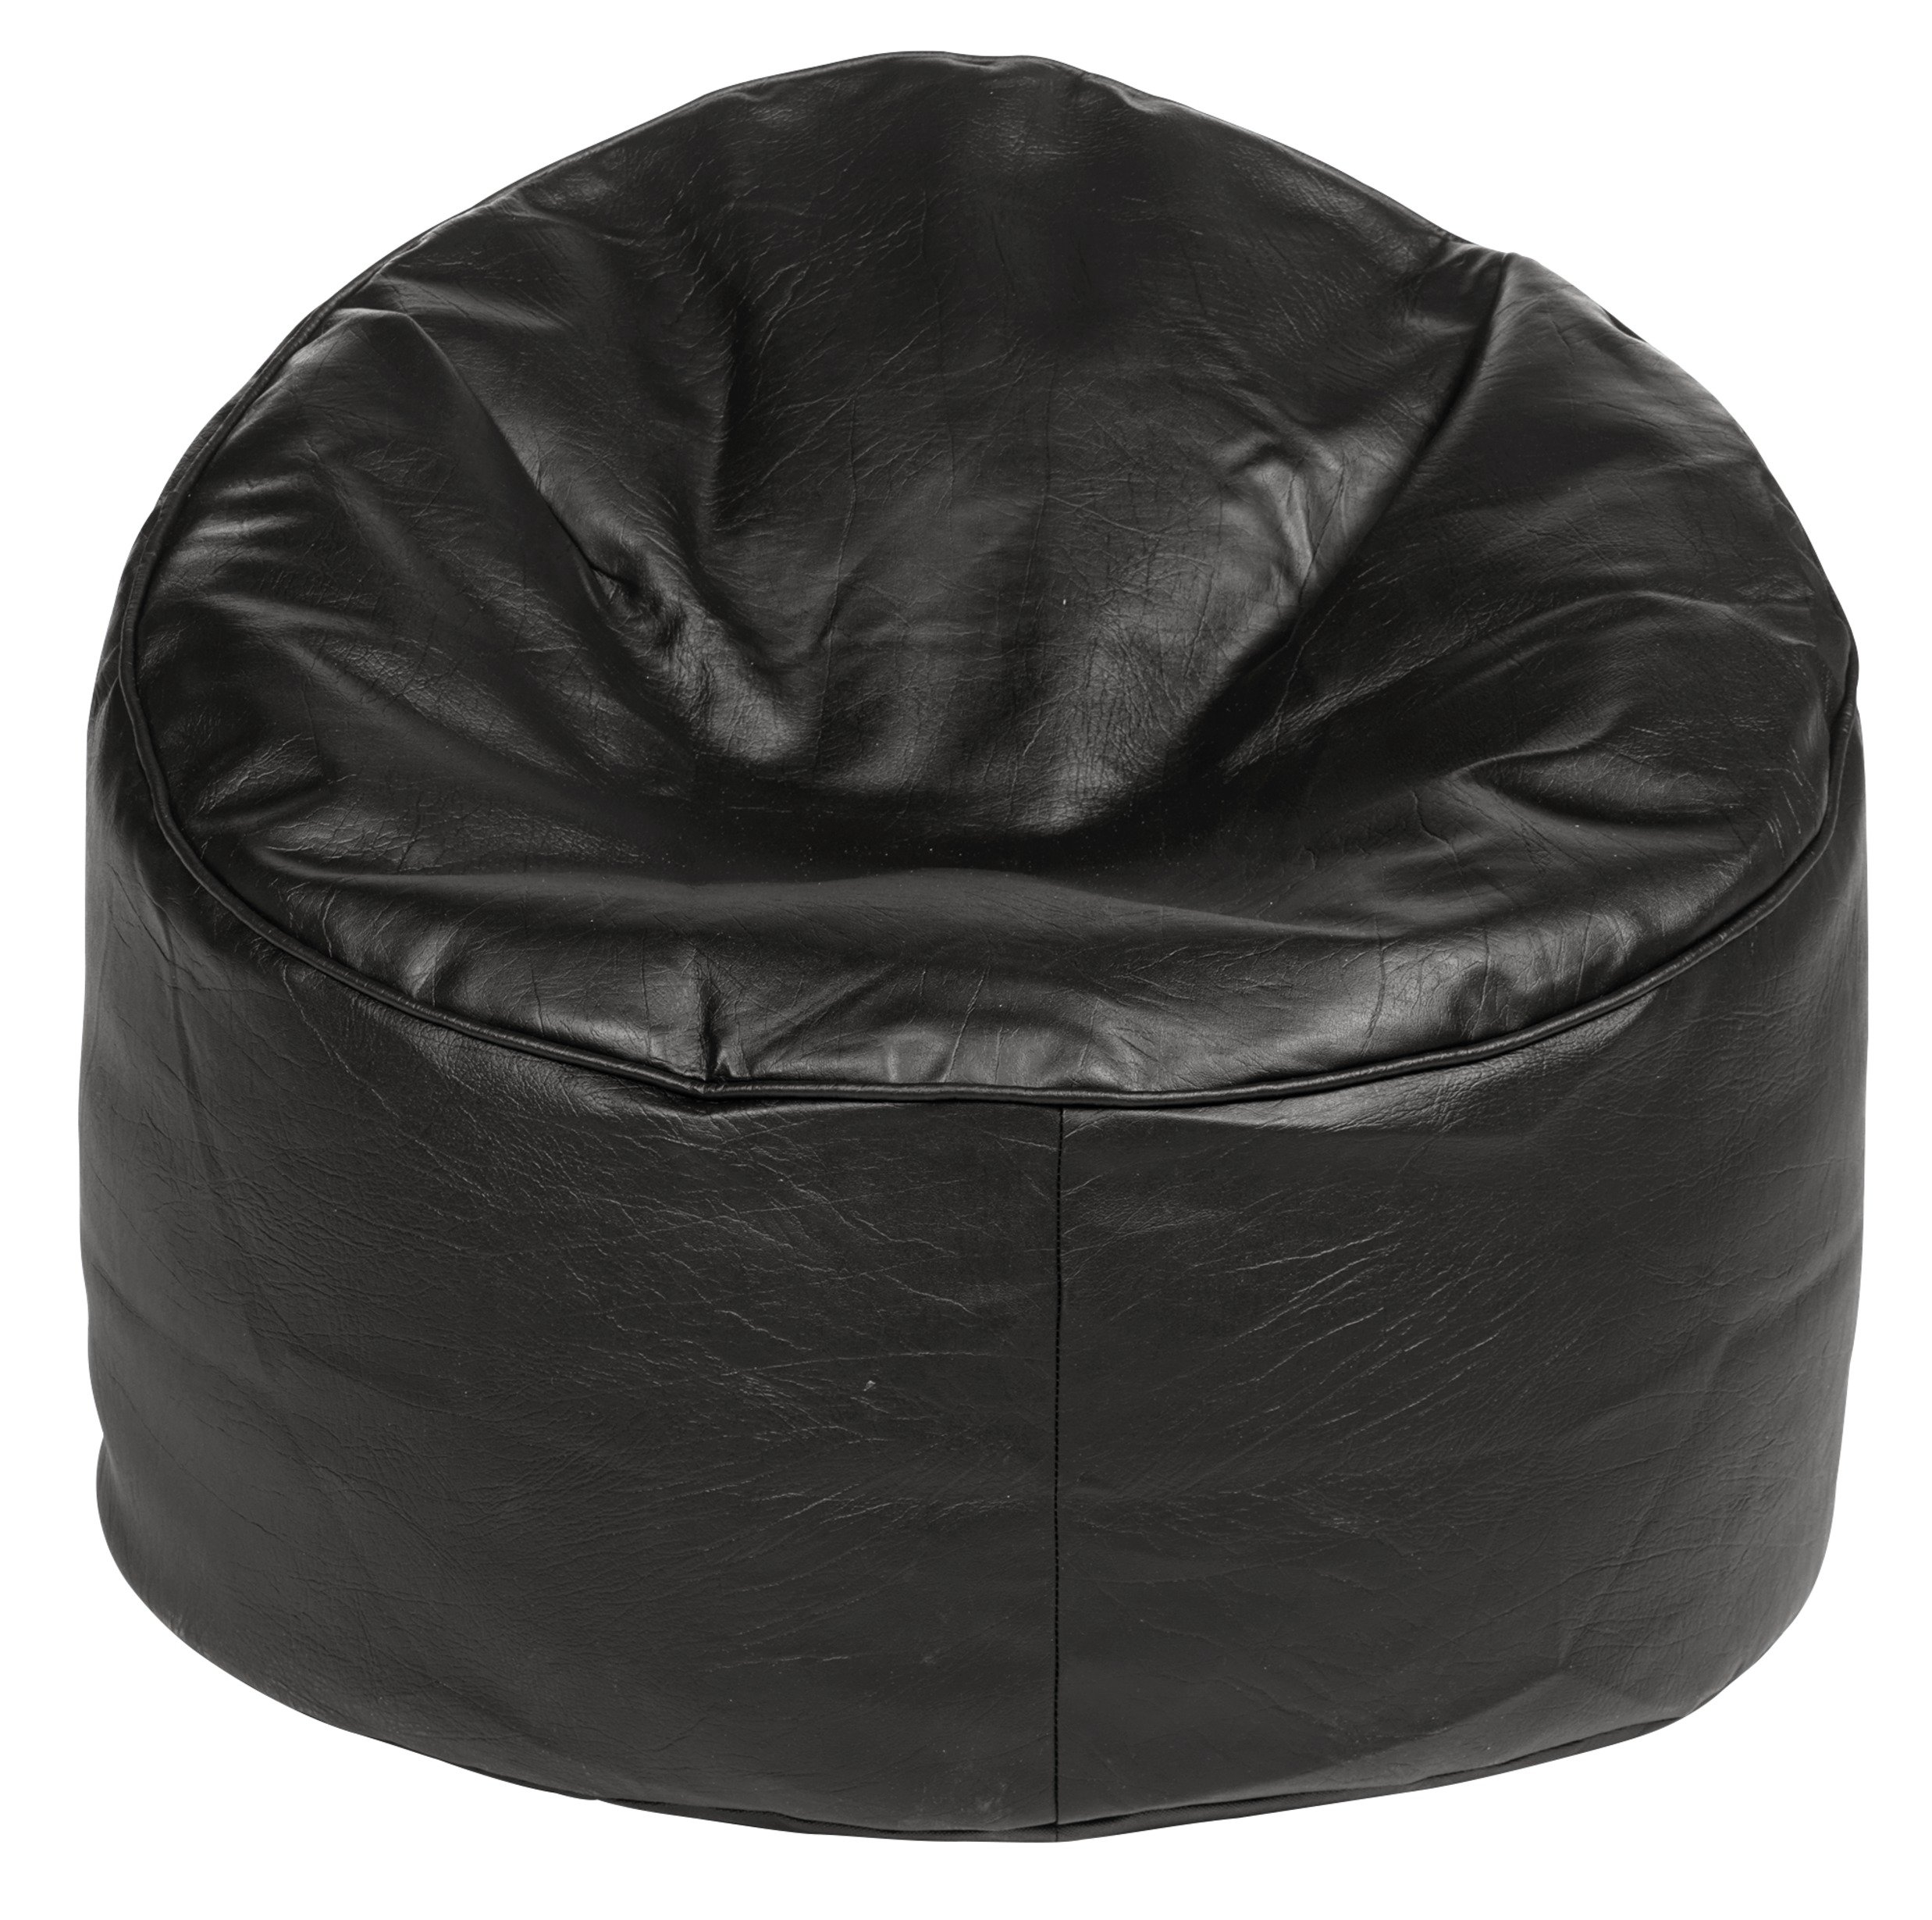 HOME Leather Effect Bean Chair - Black.